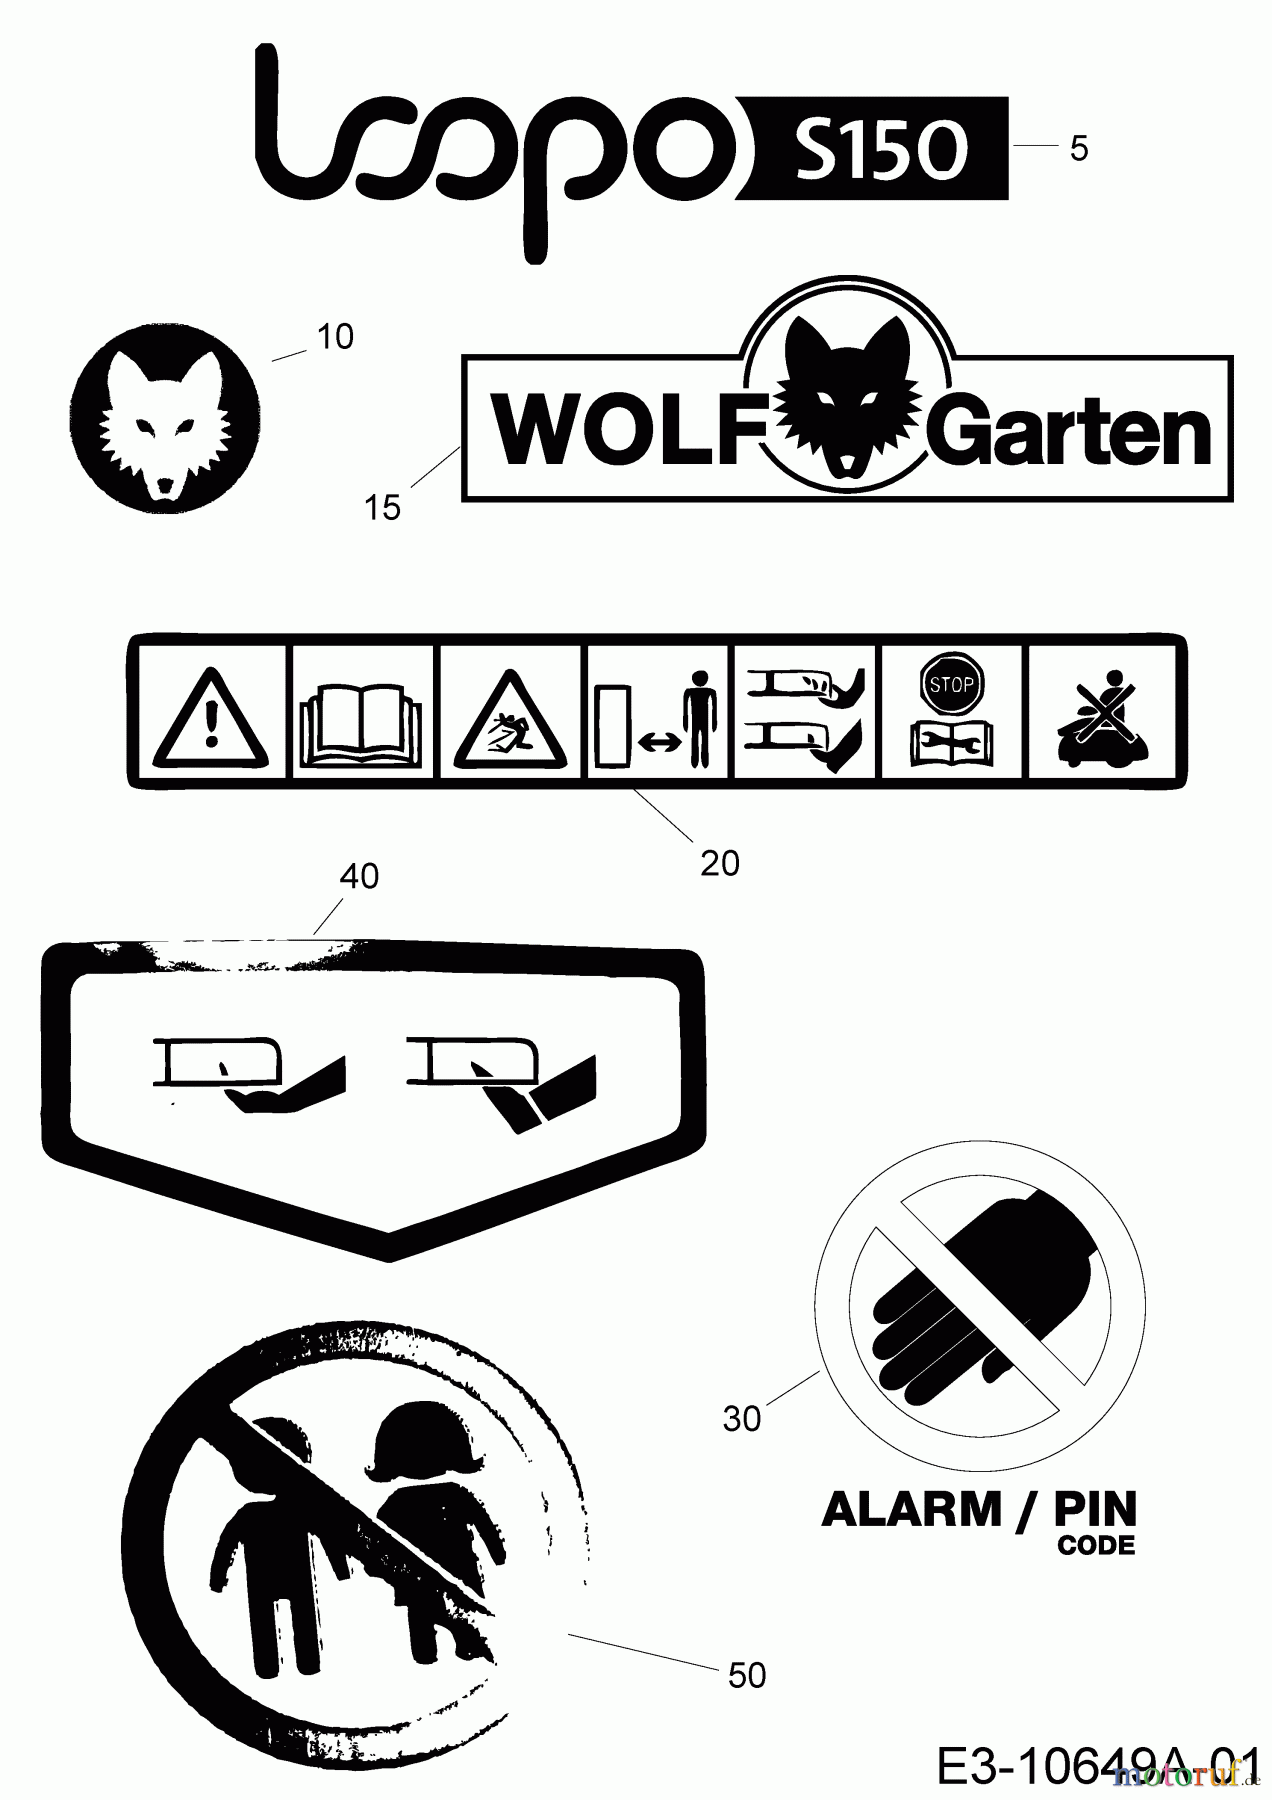  Wolf-Garten Mähroboter Loopo S150 22AXBACA650  (2019) Aufkleber